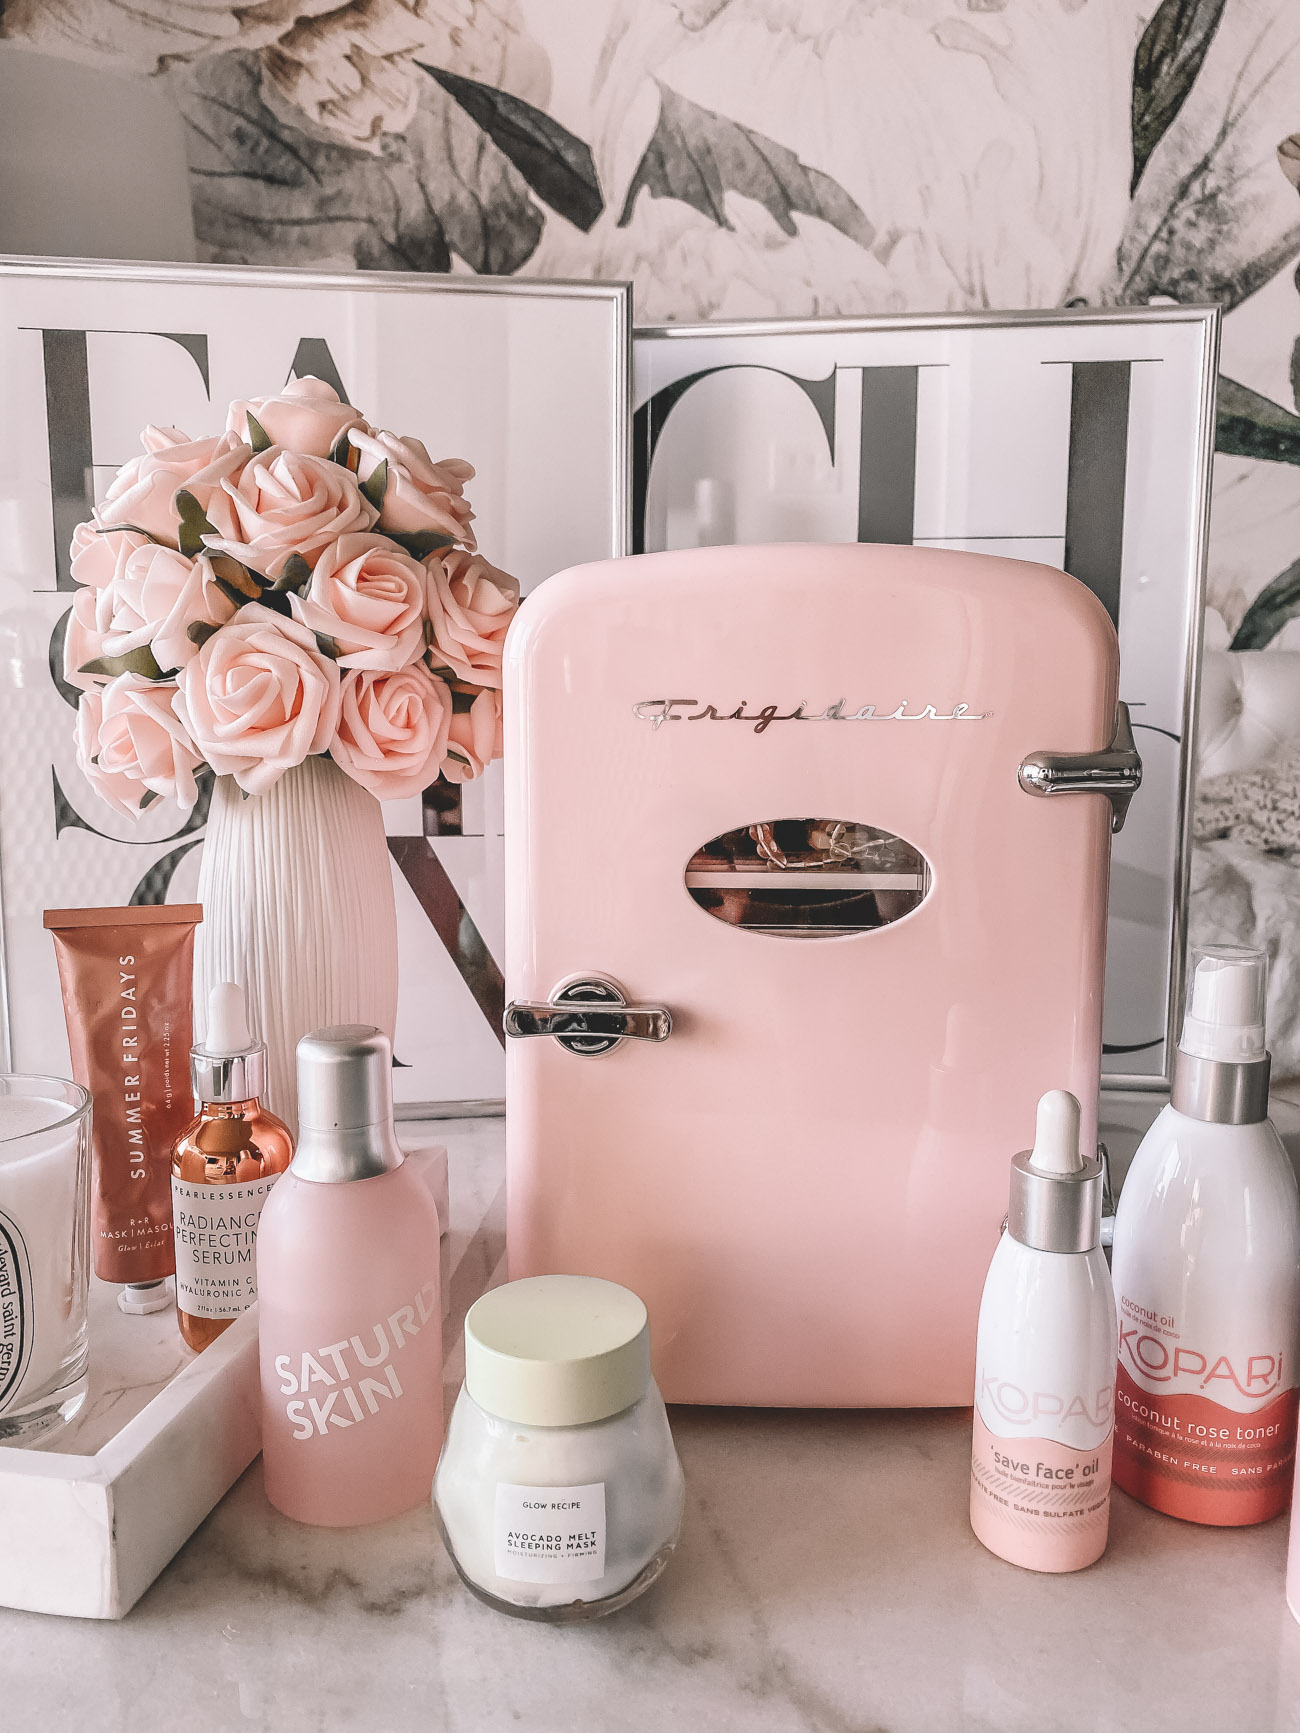 Skin Fridge | Pink skin fridge | Skin care essentials | skin fridge essentials | Skin care products | Blondie in the City by Hayley Larue